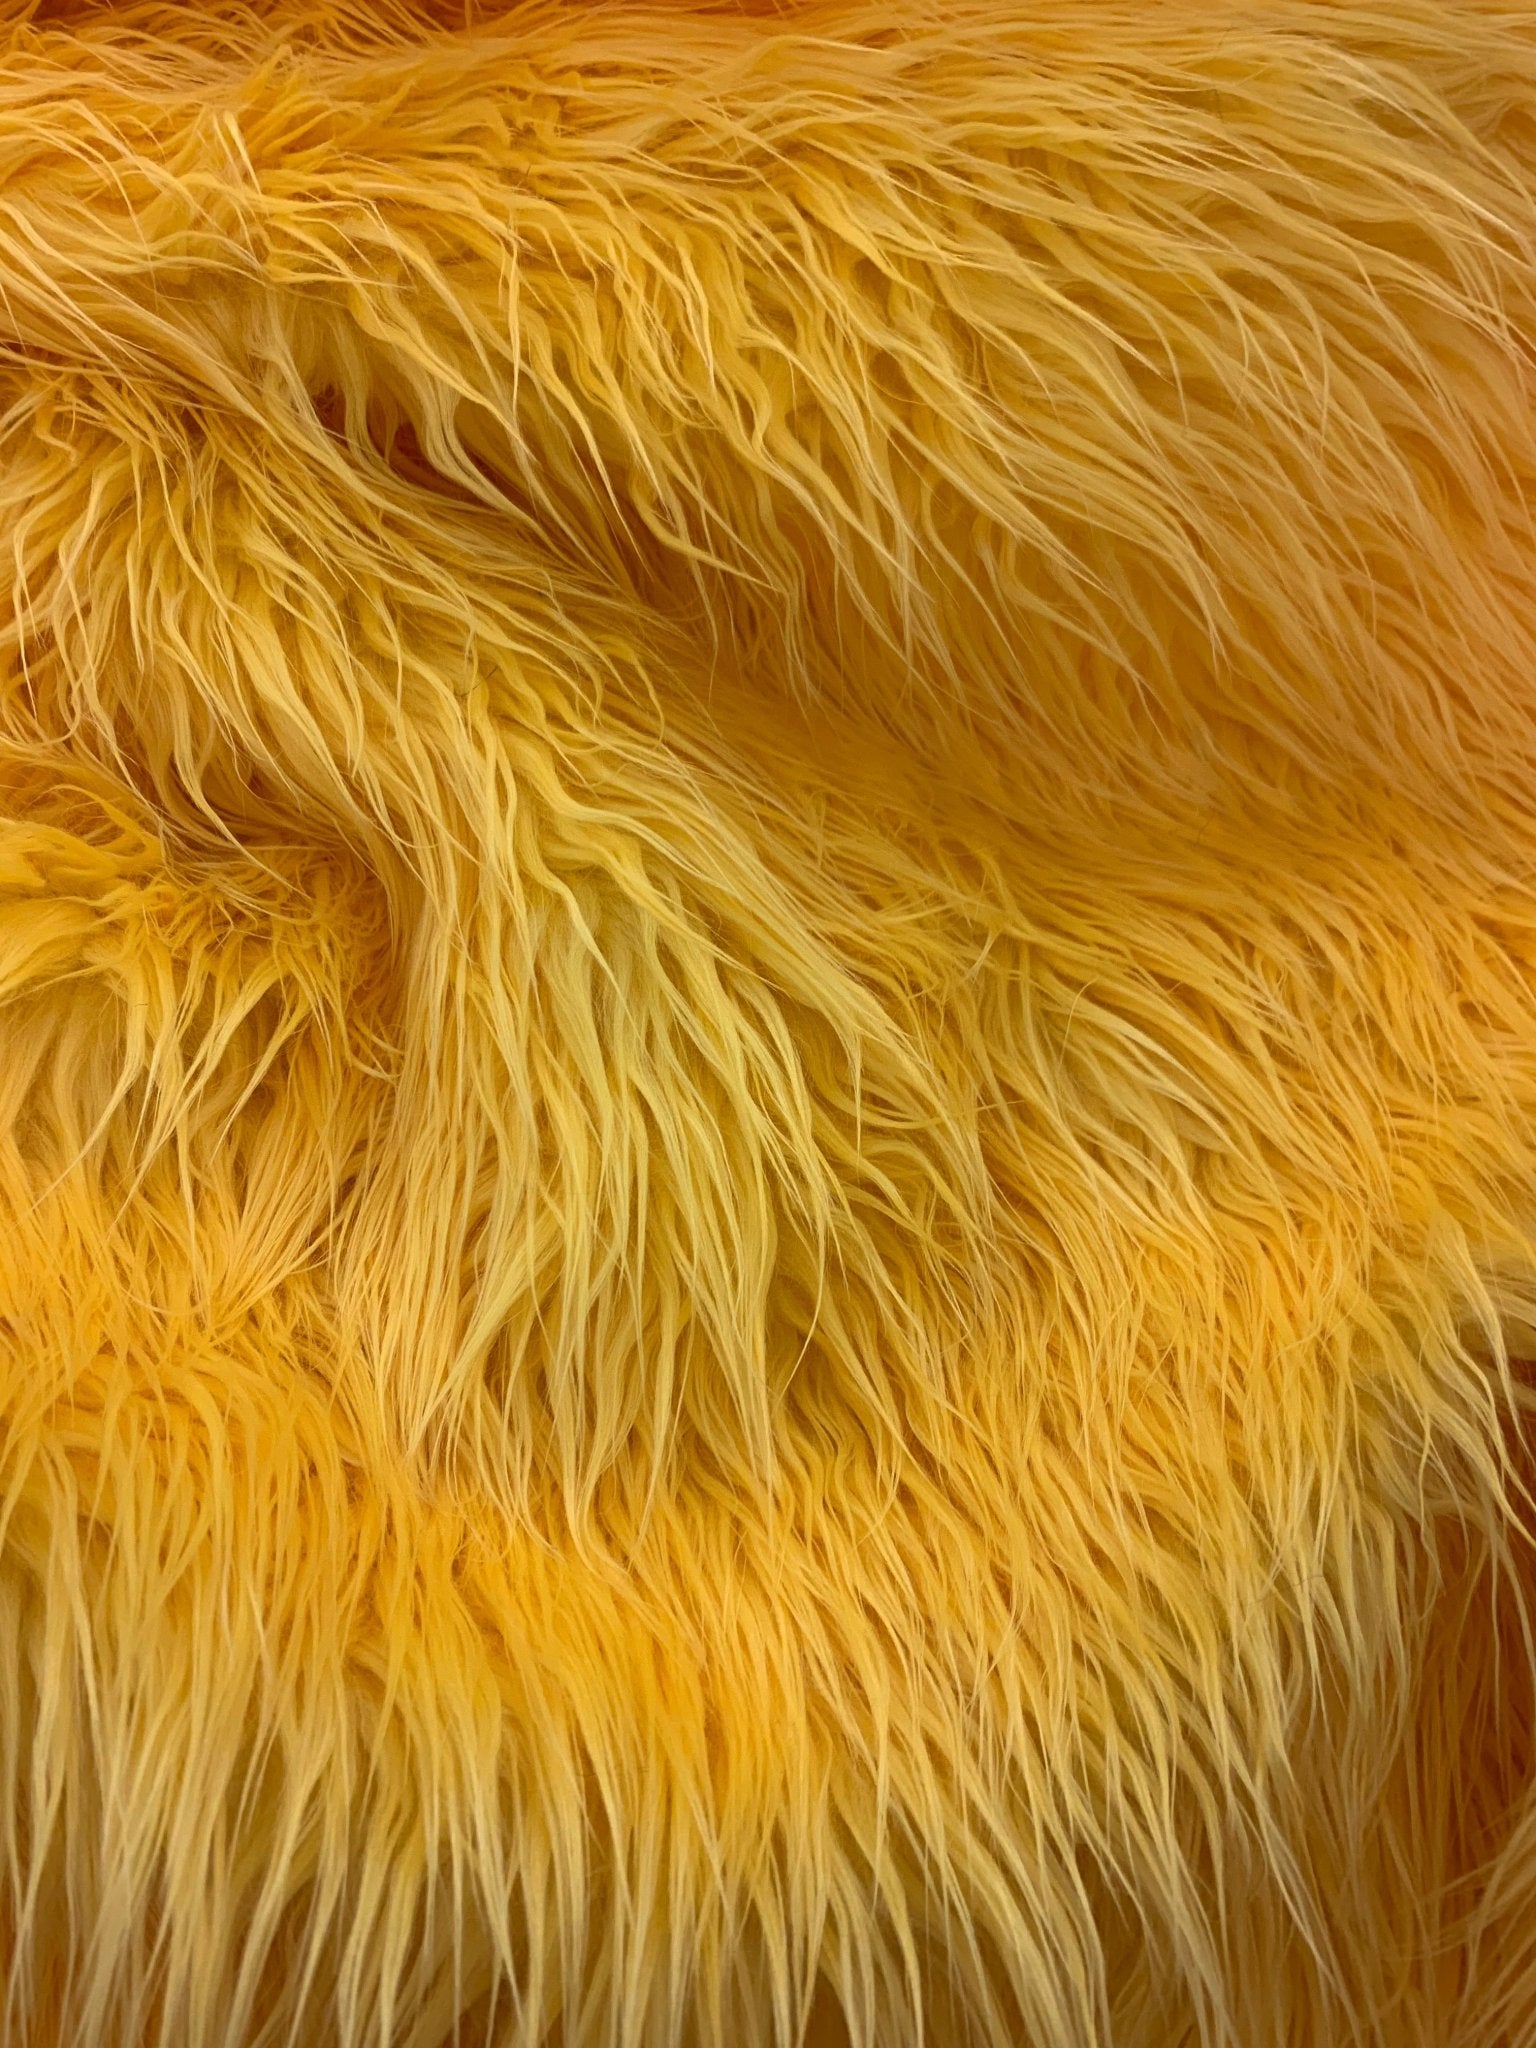 Mongolian Long Pile Fake Faux Fur Fabric Sold By The YardICEFABRICICE FABRICSMango YellowBy The Yard (60 inches Wide)Mongolian Long Pile Fake Faux Fur Fabric Sold By The Yard ICEFABRIC